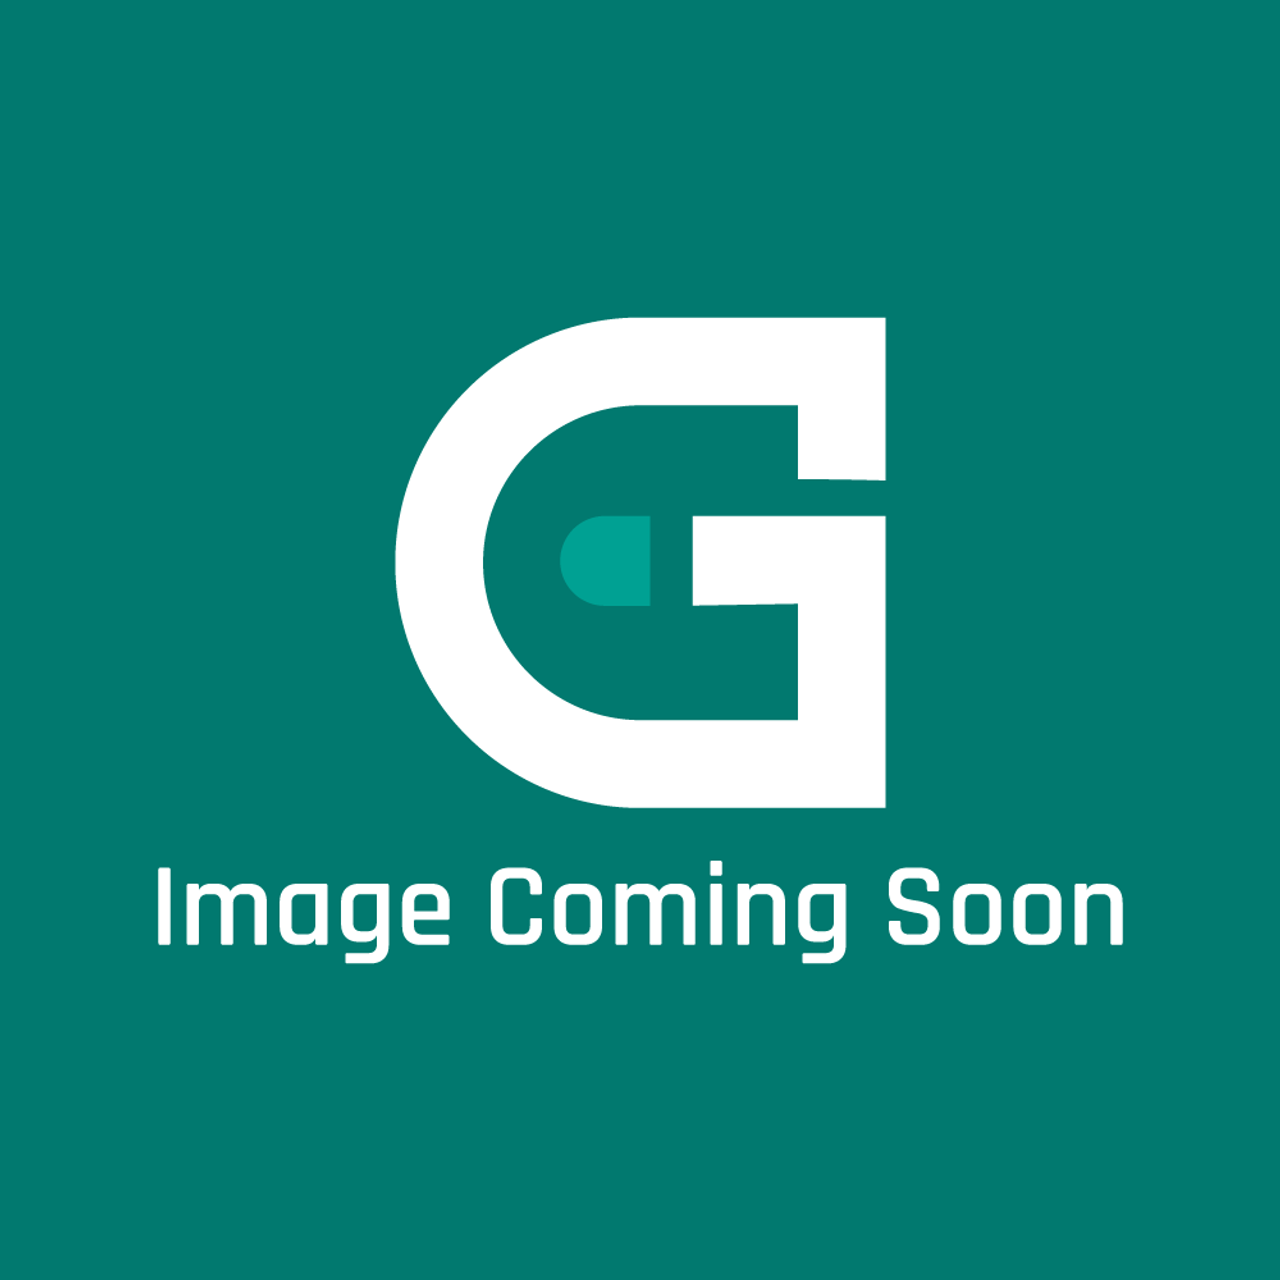 Groen 147375 - Weldment, Drain Manifold Assy - Image Coming Soon!